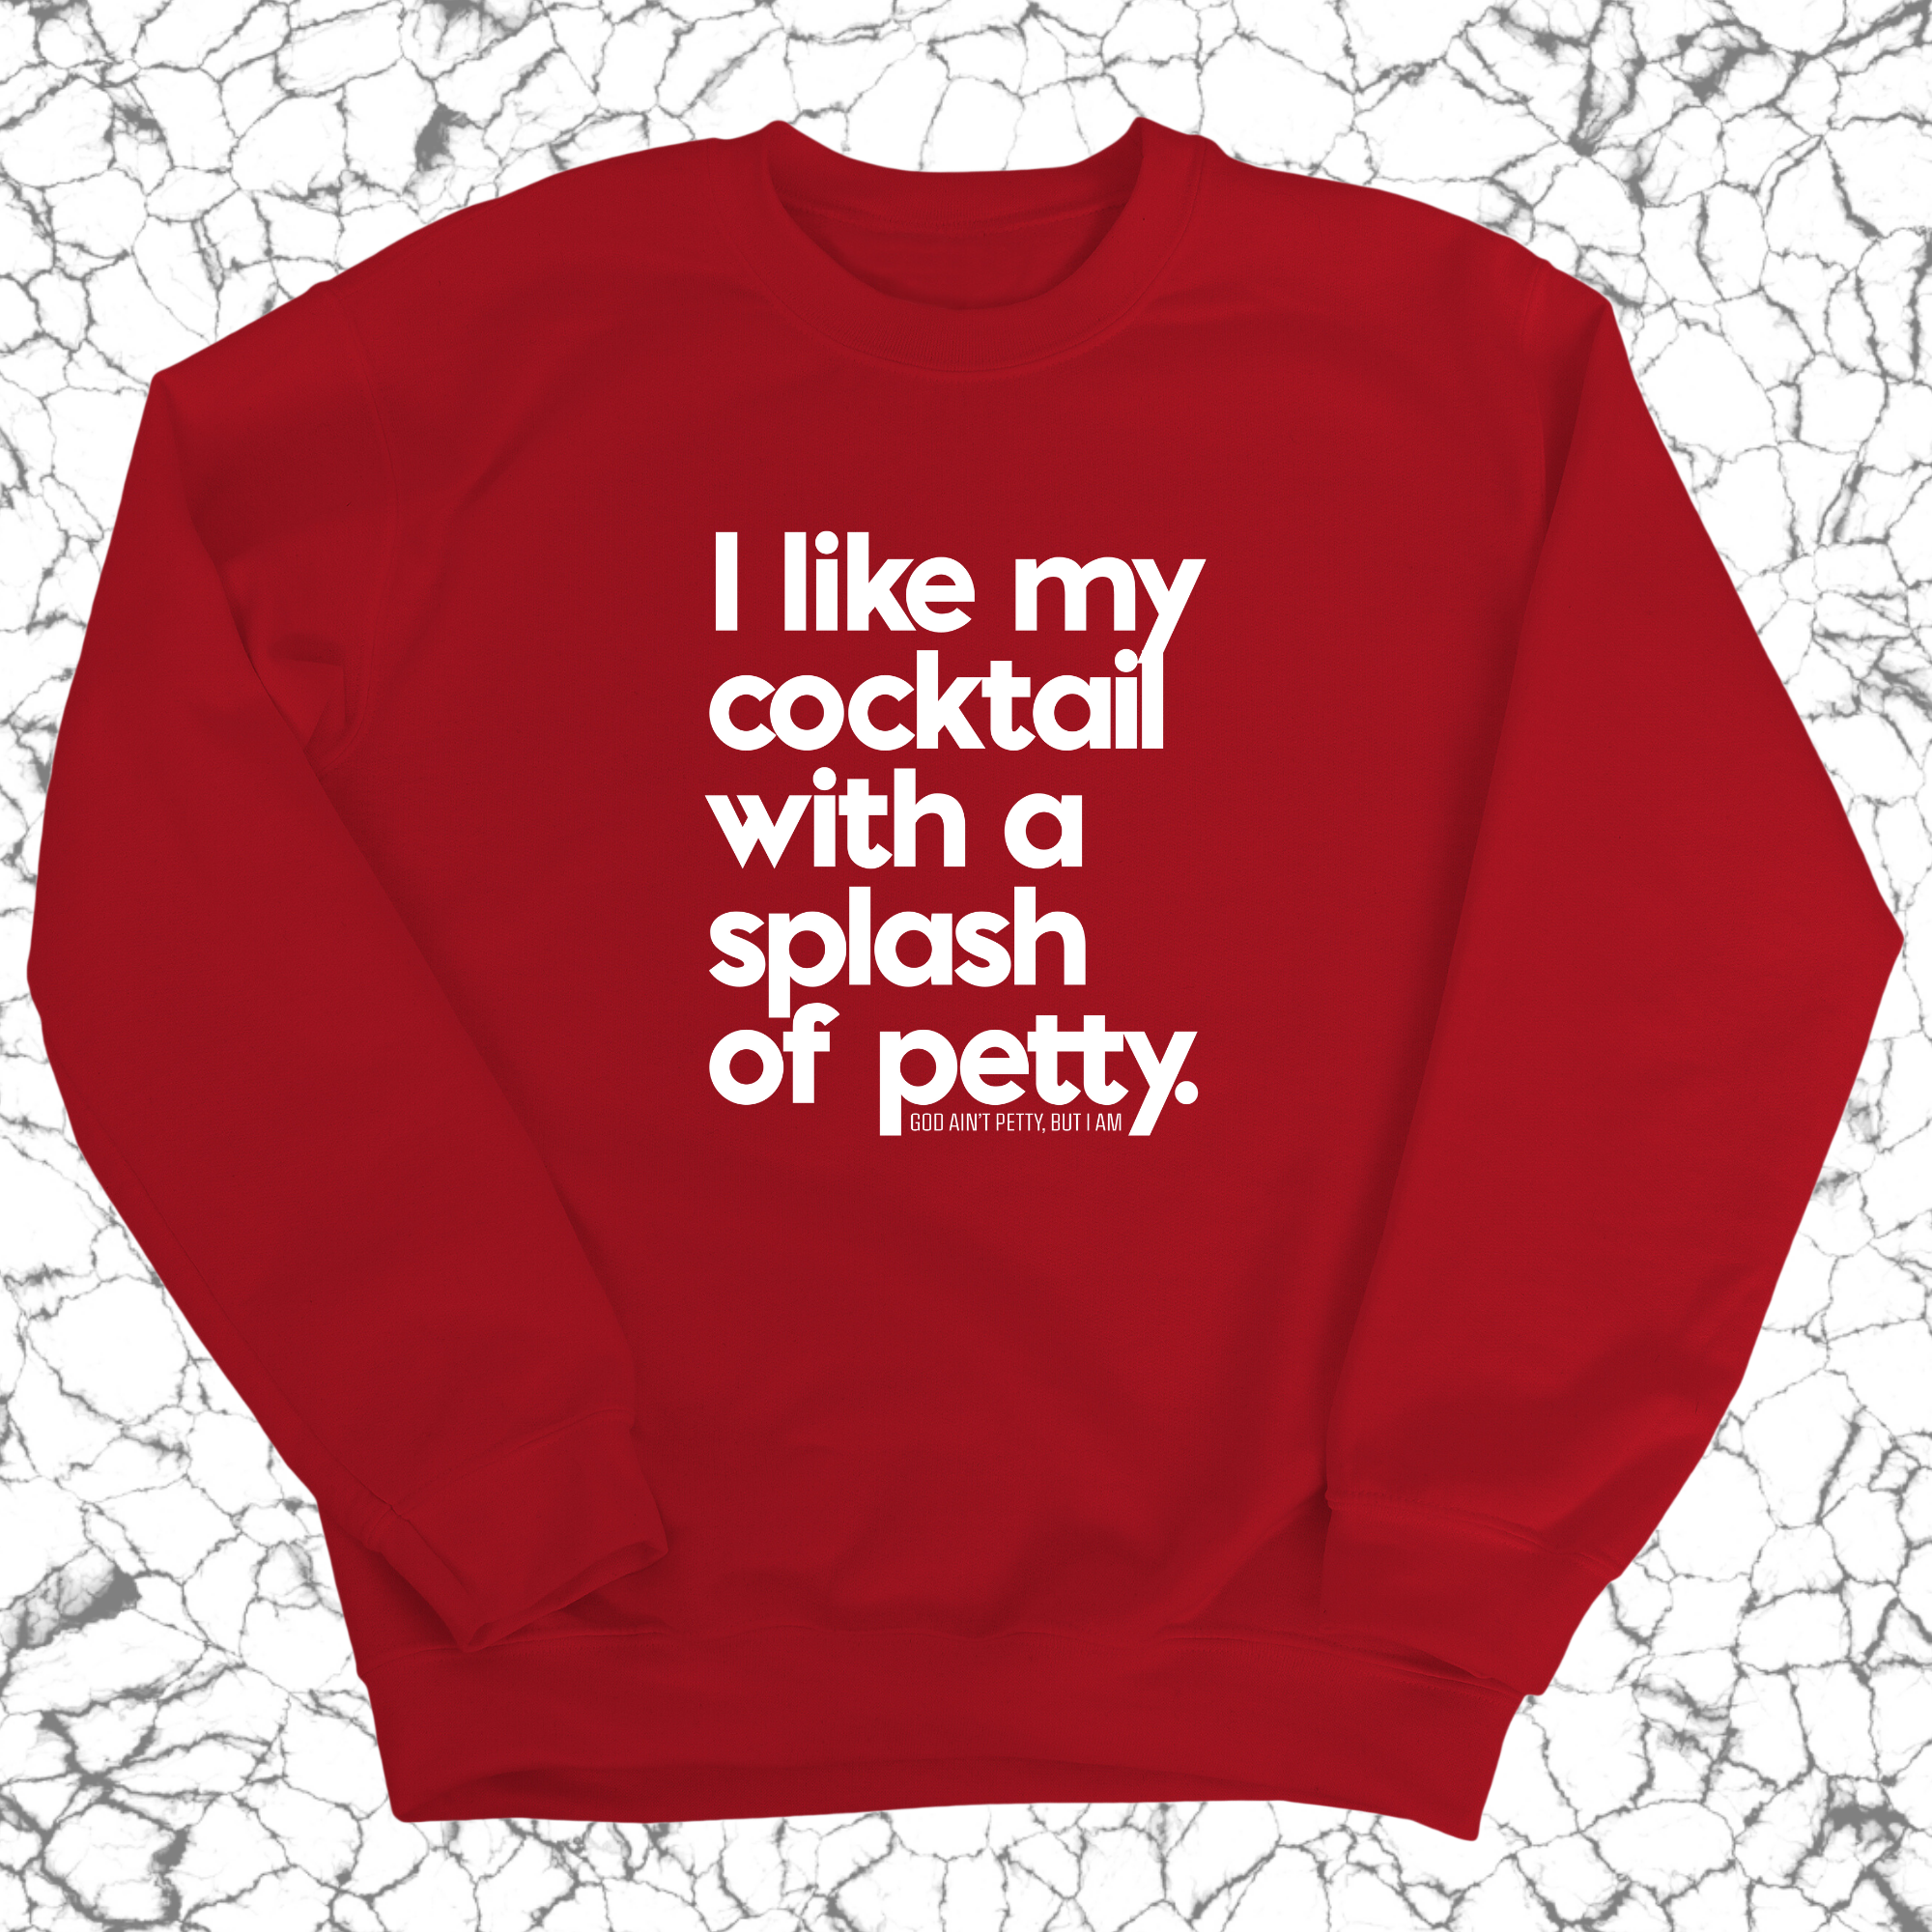 I like my cocktail with a splash of petty Unisex Sweatshirt-Sweatshirt-The Original God Ain't Petty But I Am